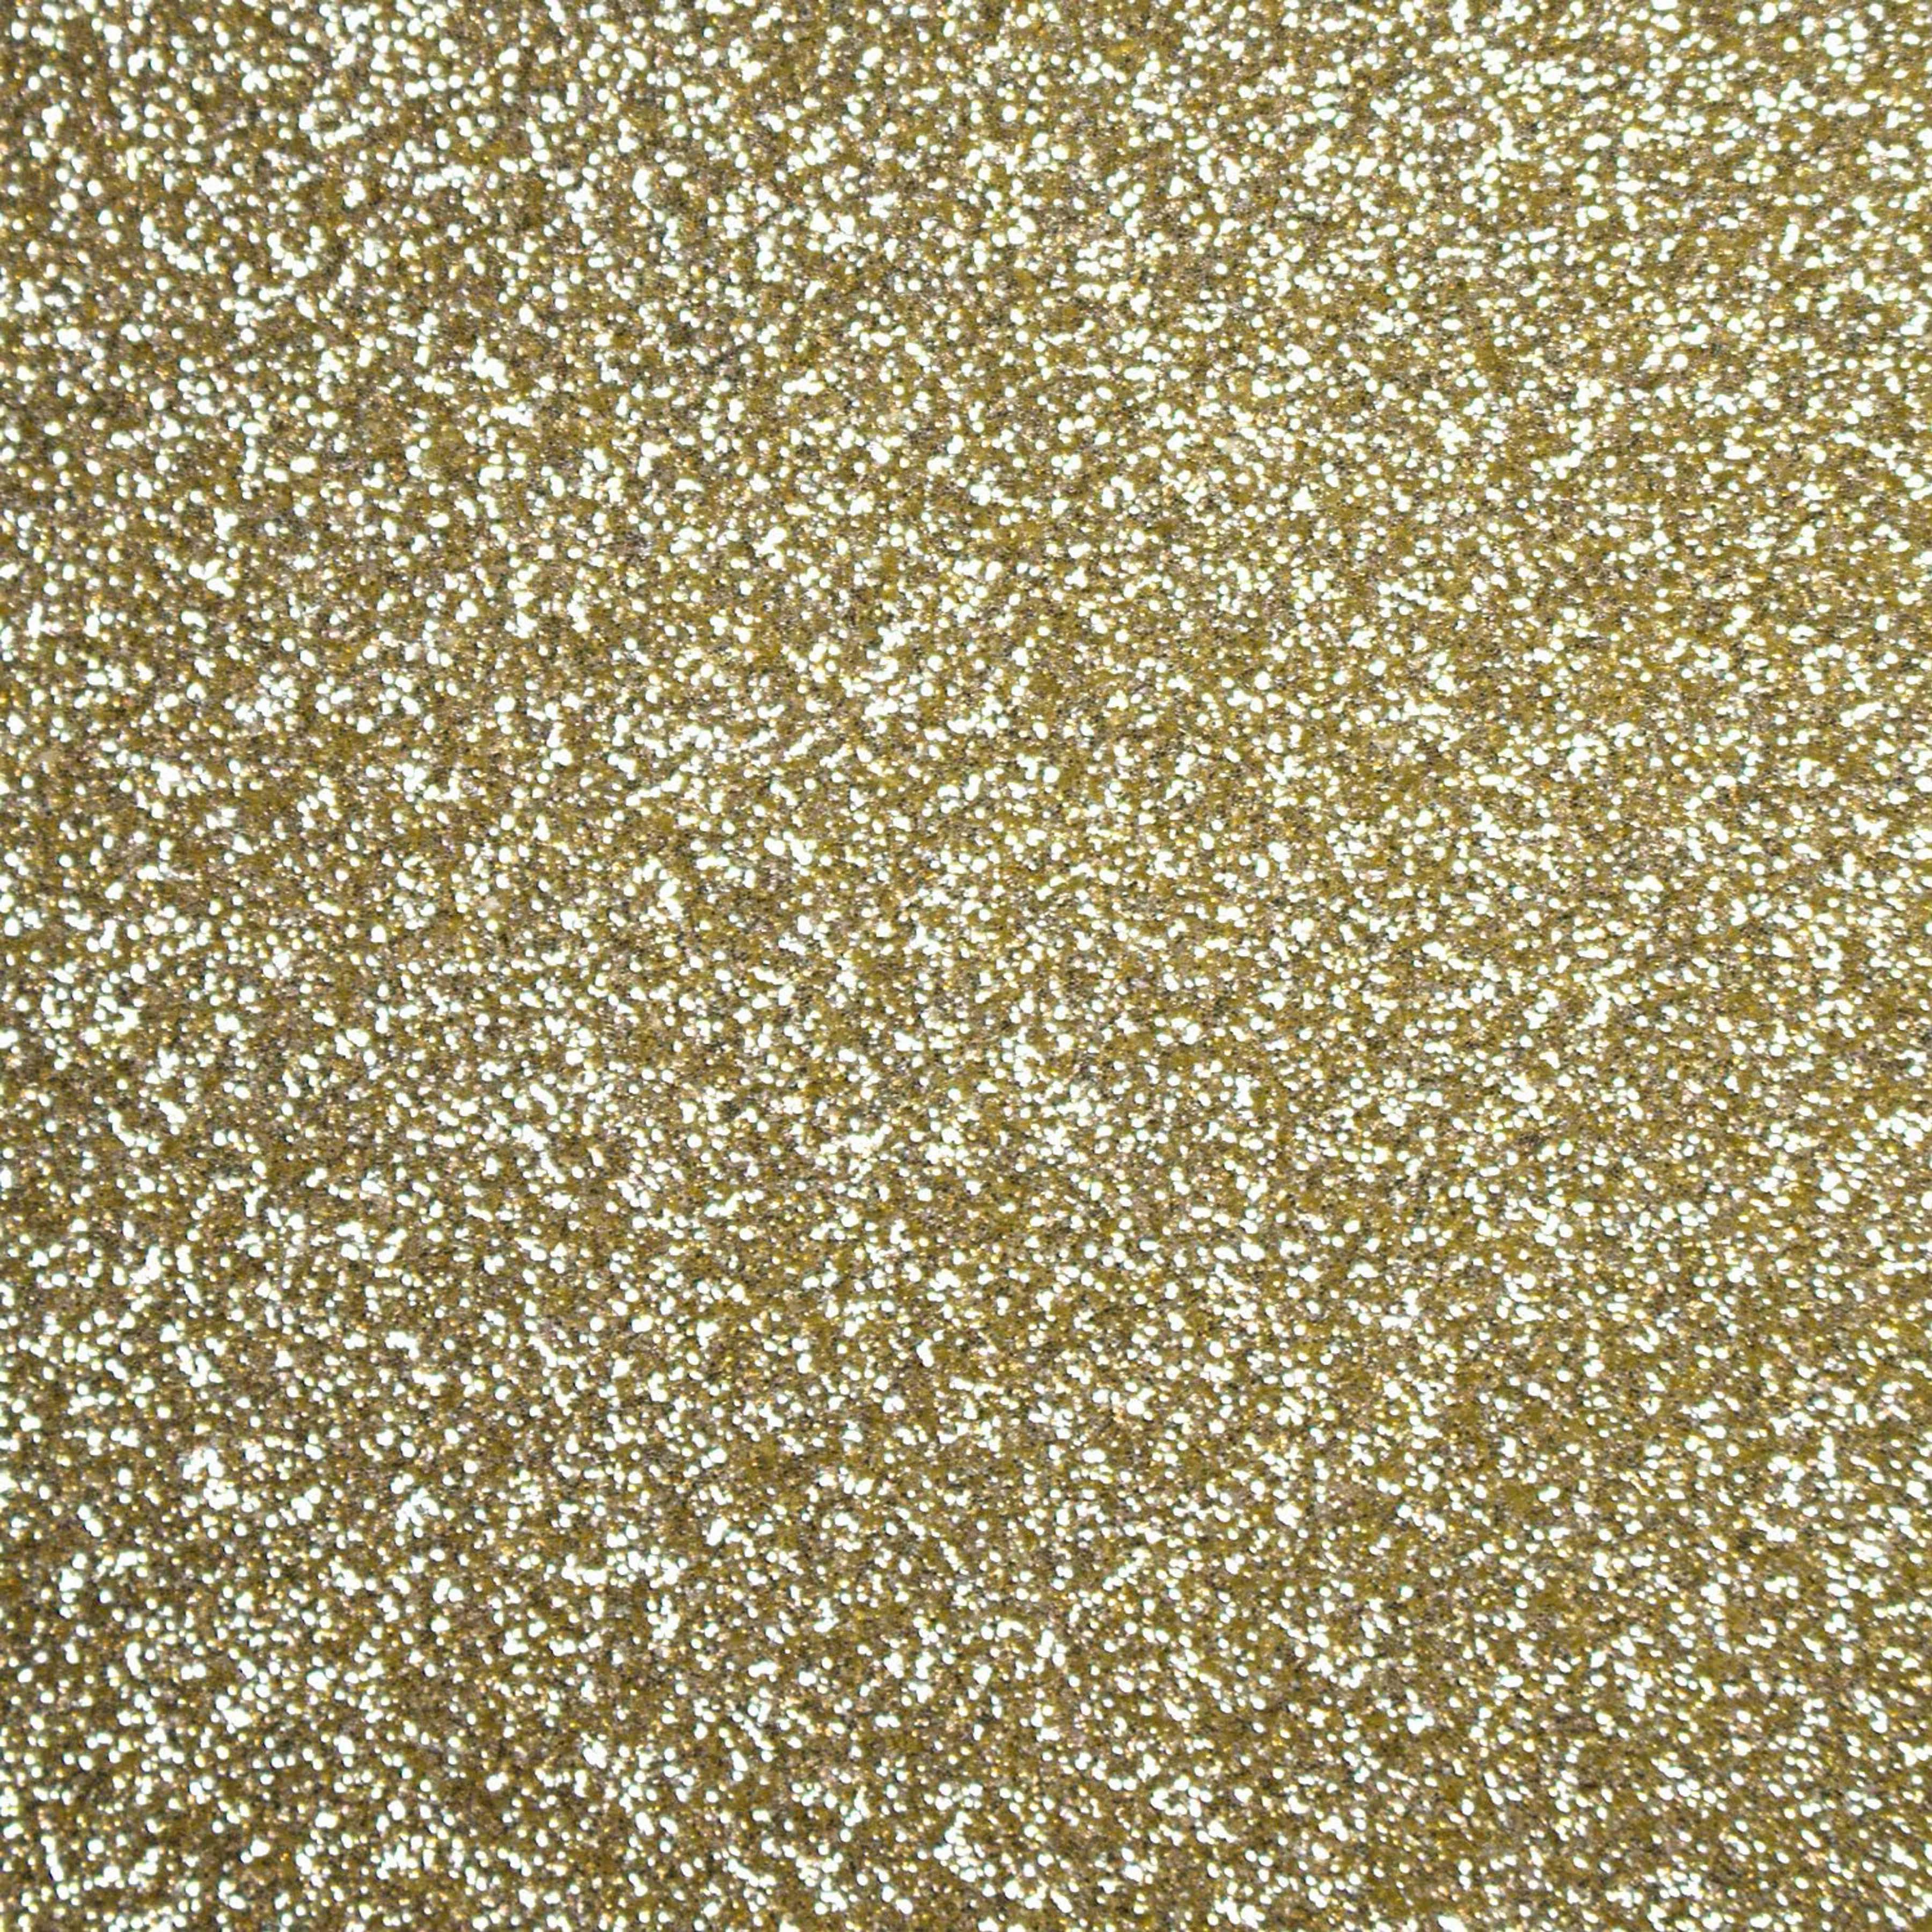 12 x 5 Feet Vintage Gold Glitter HTV - Stahls’ CAD-CUT® - Glitter Flake  Heat Transfer Vinyl 